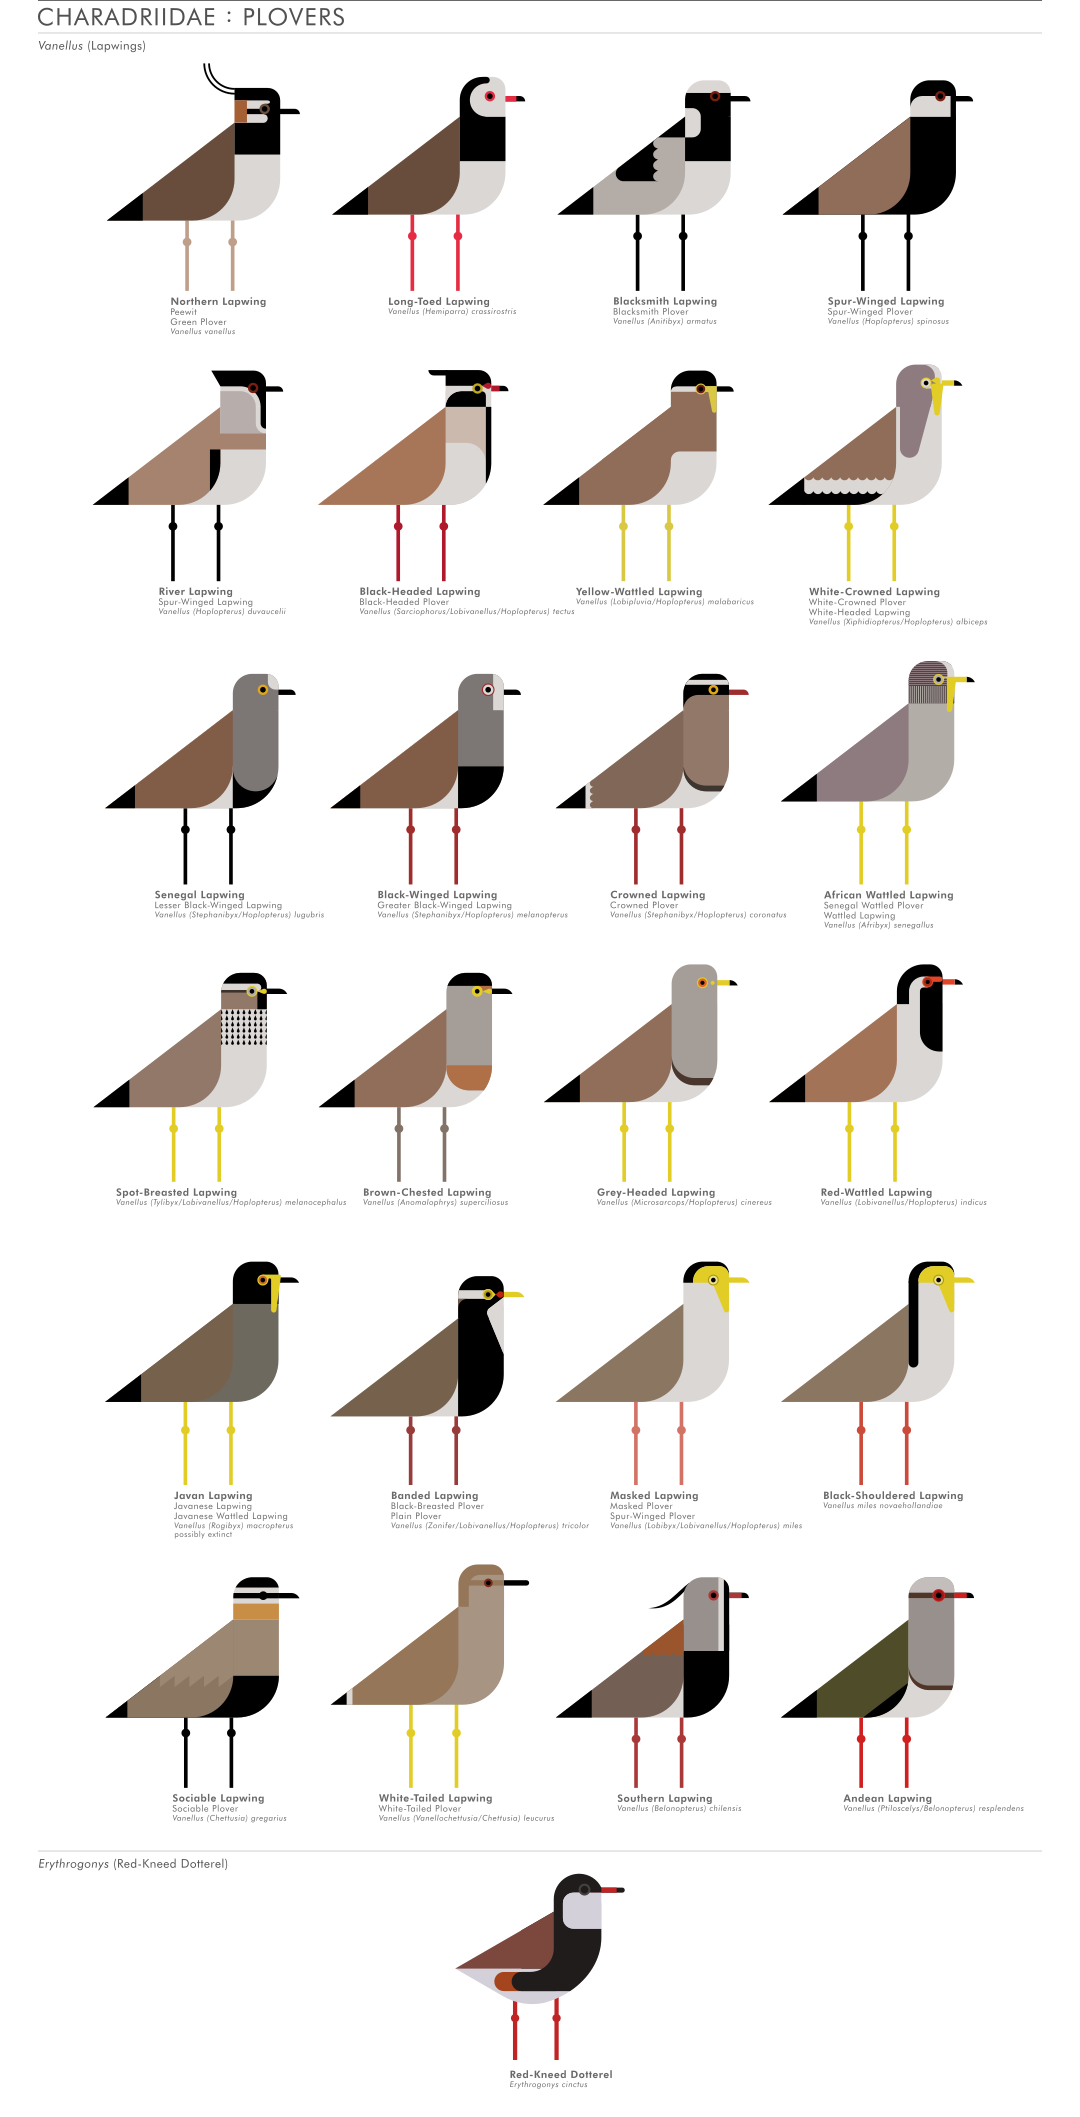 scott partridge - ave - avian vector encyclopedia - shorebirds plovers - vector bird art